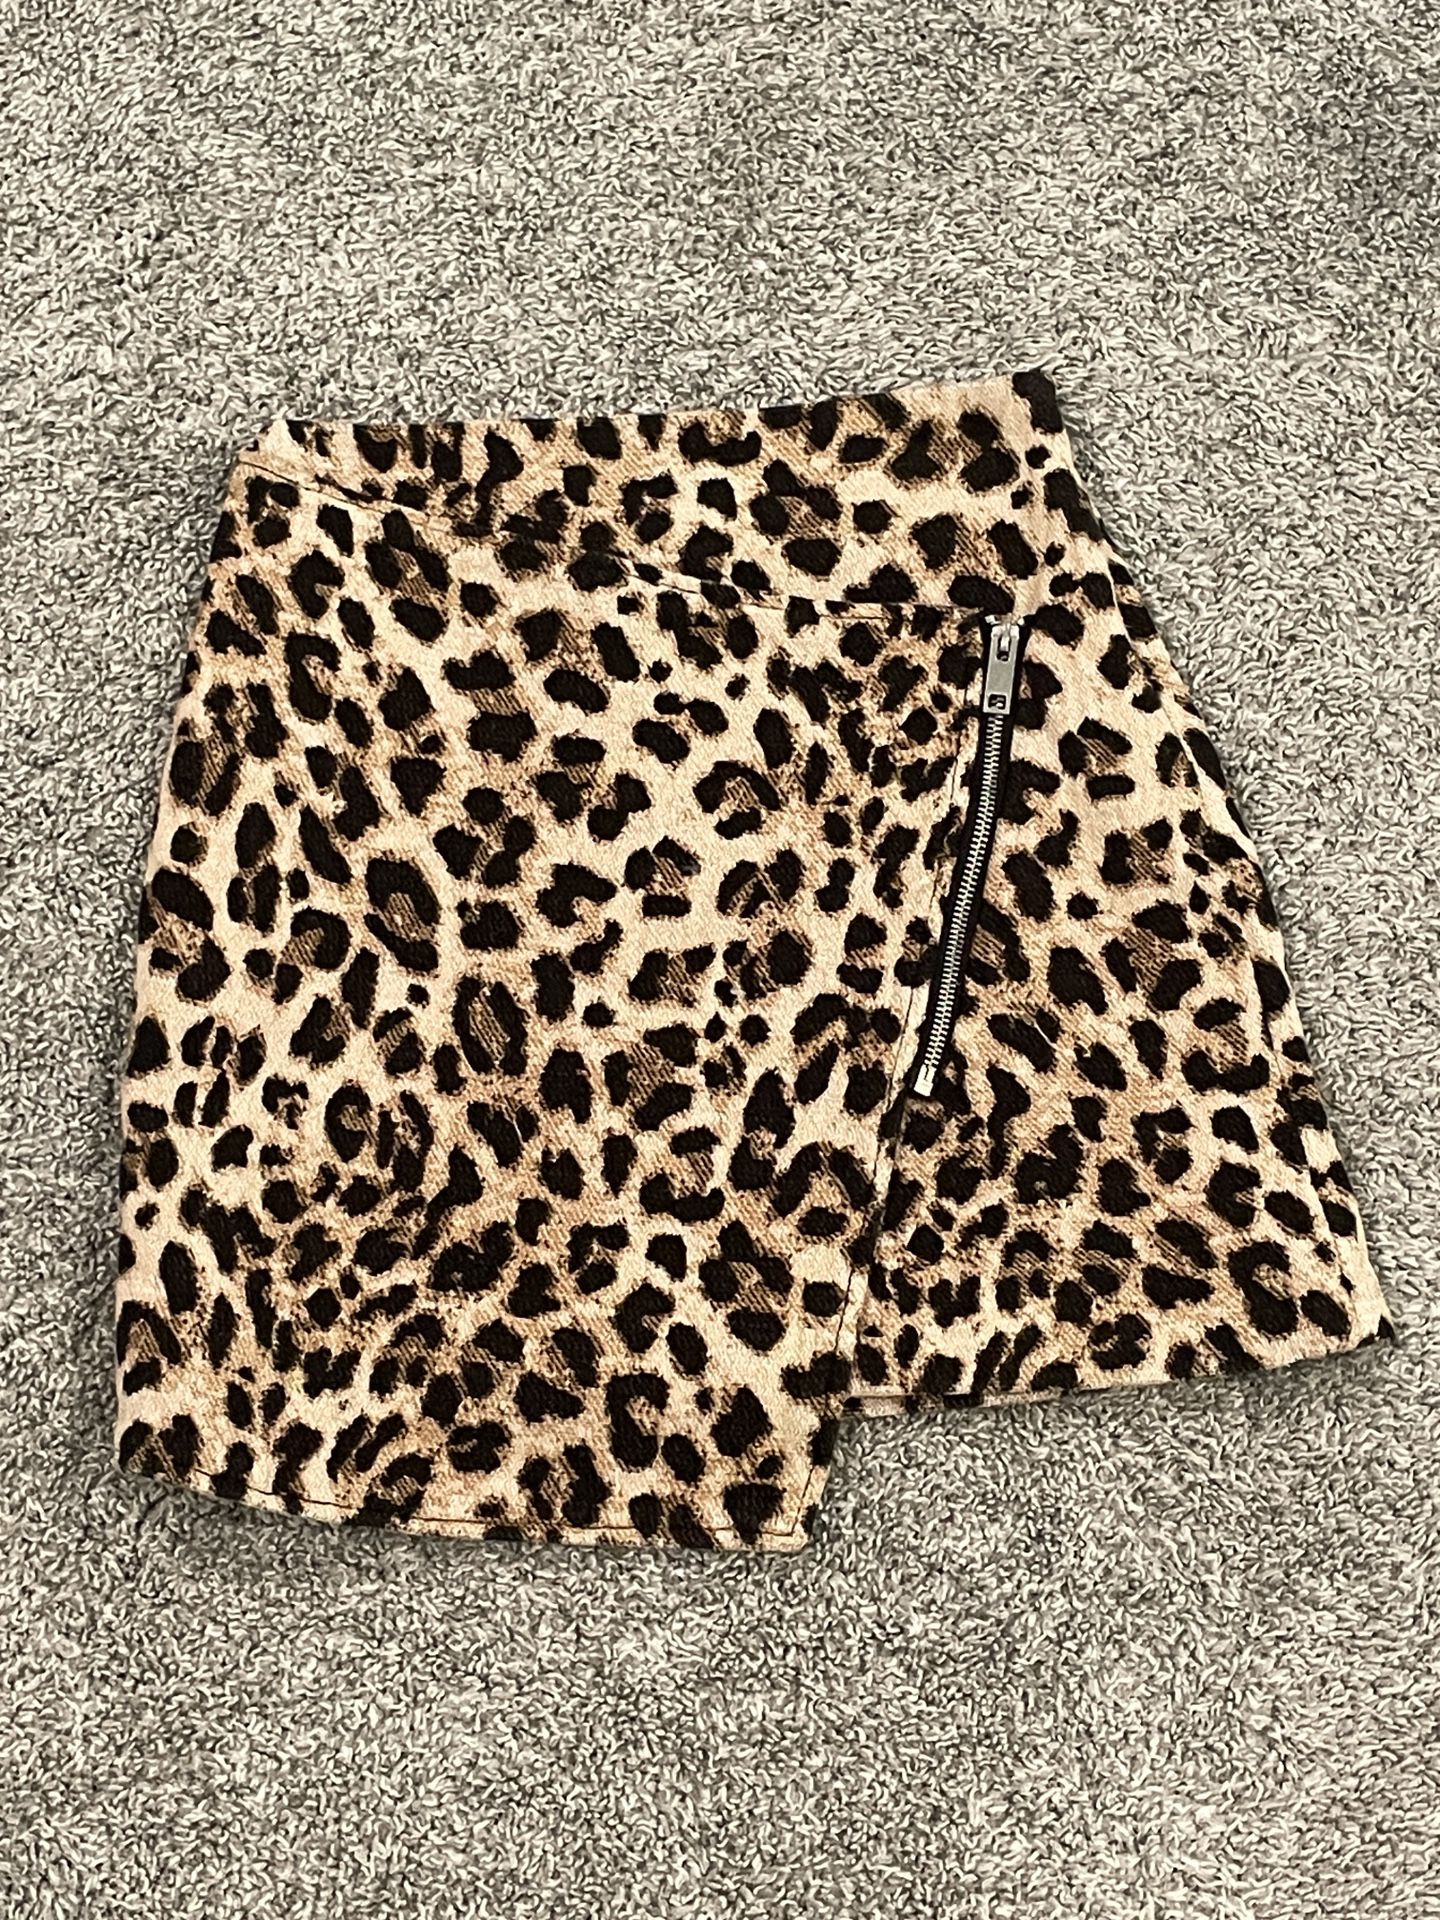 NWOT H&M Cheetah Print Skirt Size 2